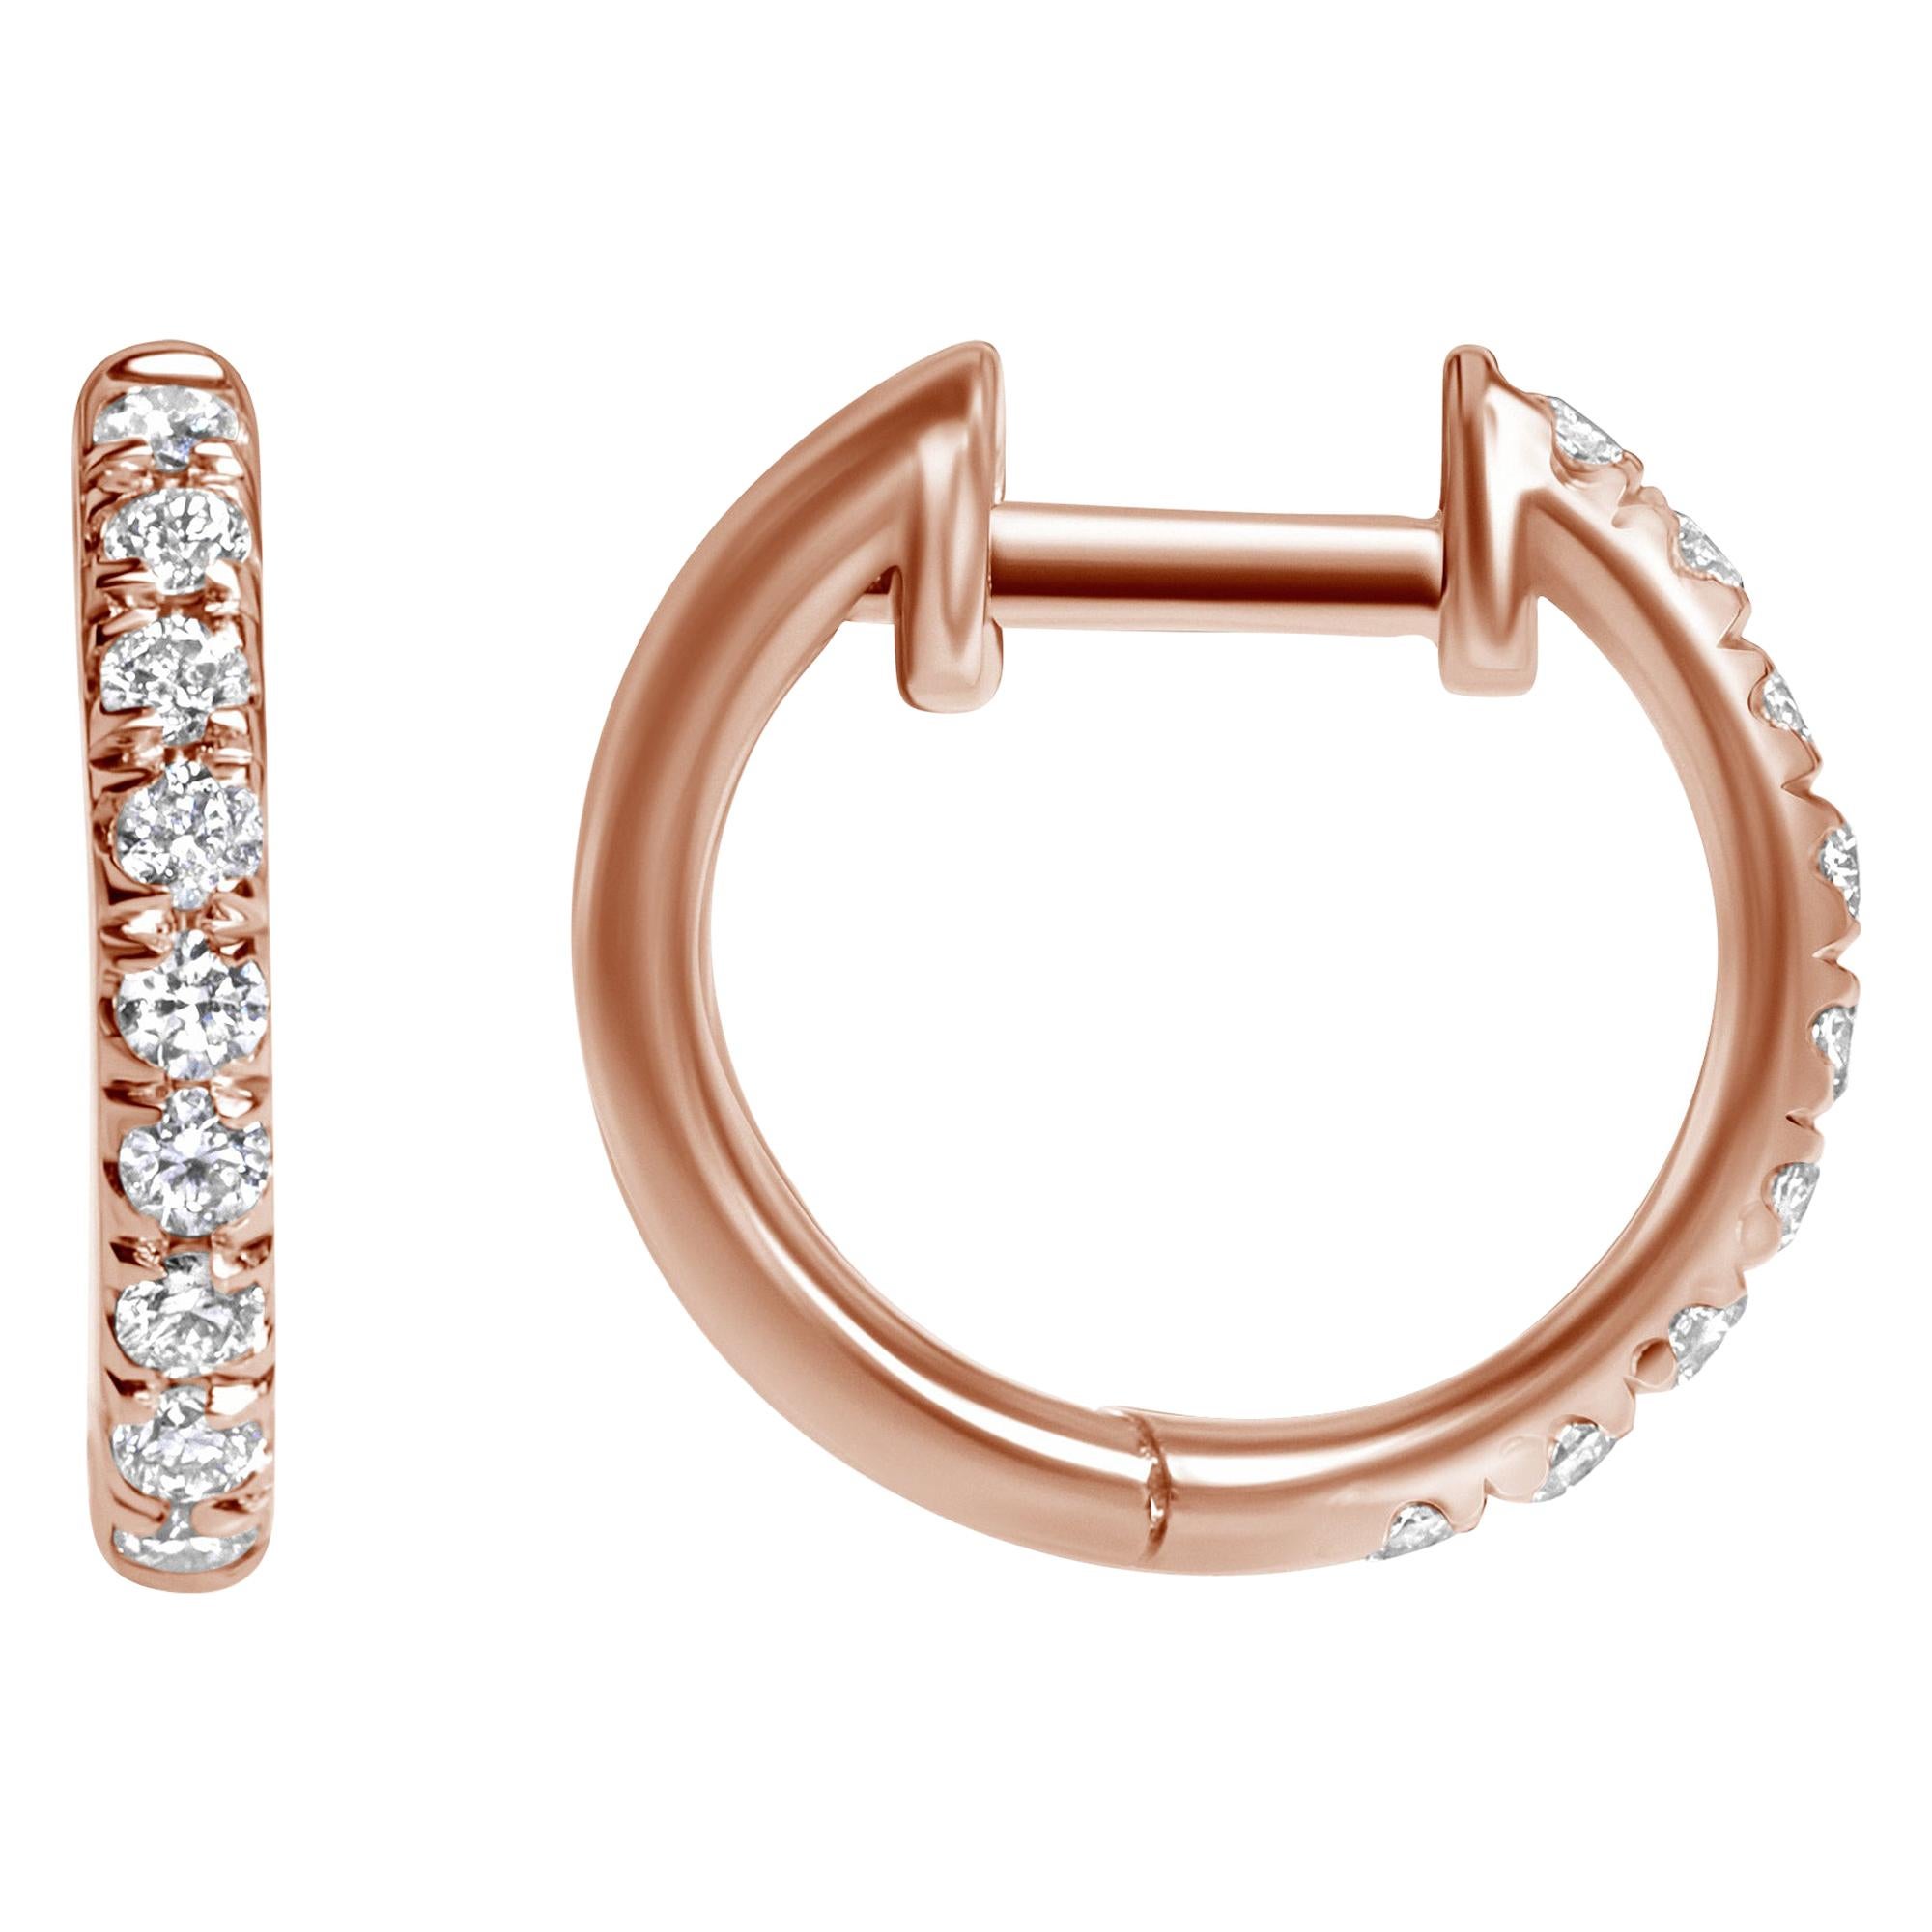 0.27 Carat Lori Diamond Hoop Earrings in 14 Karat Rose Gold - Shlomit Rogel